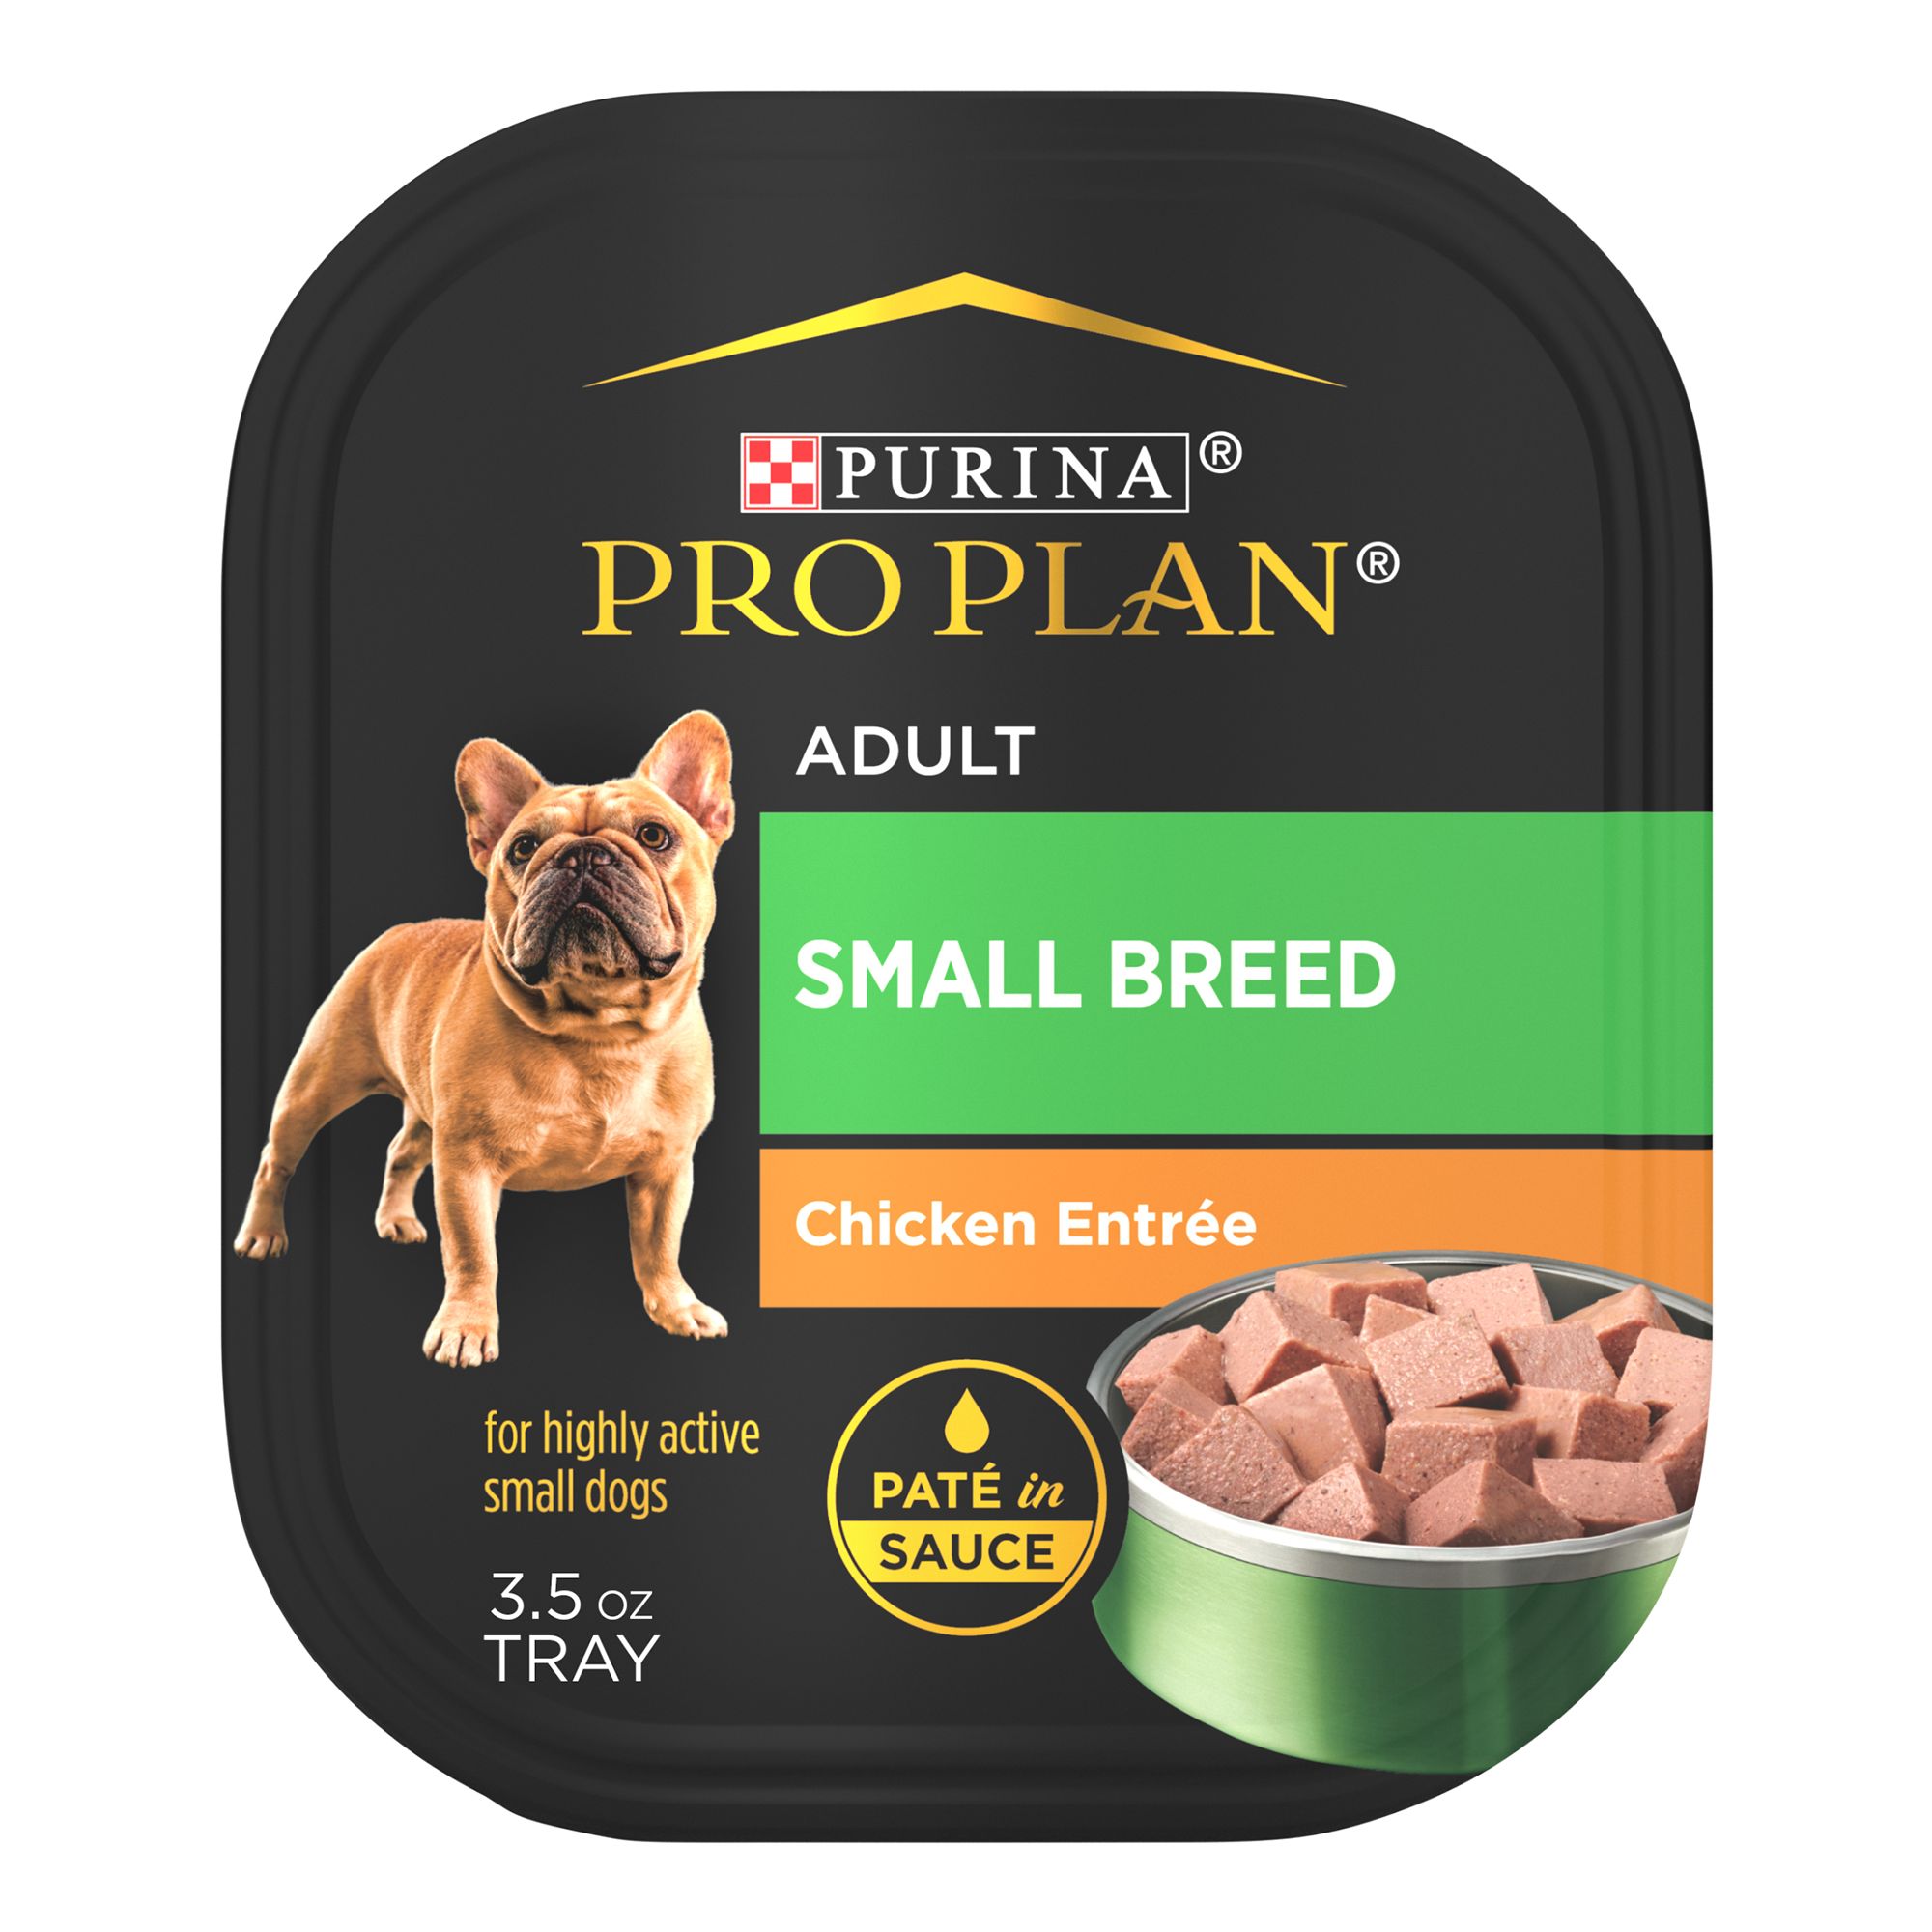 purina pro plan focus petsmart